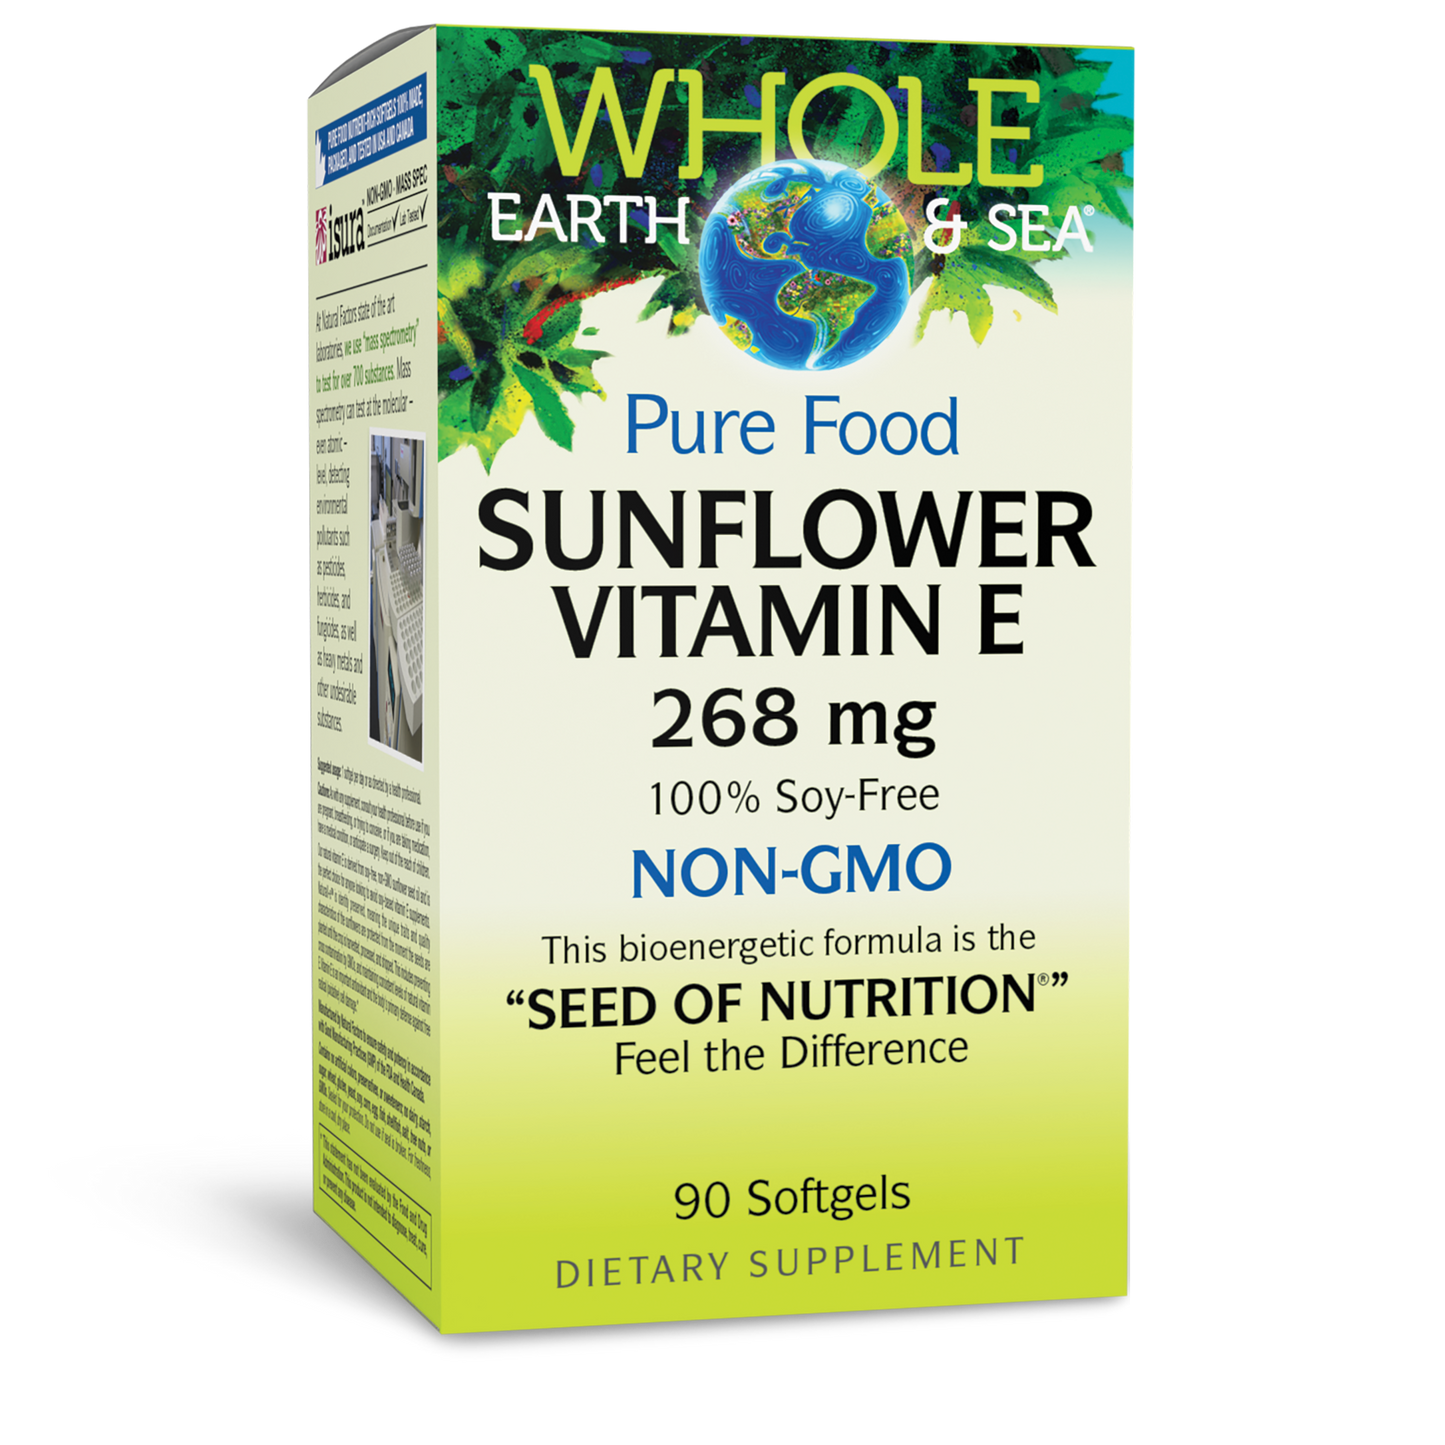 Vegan Sunflower Vitamin E|variant|hi-res|35513U